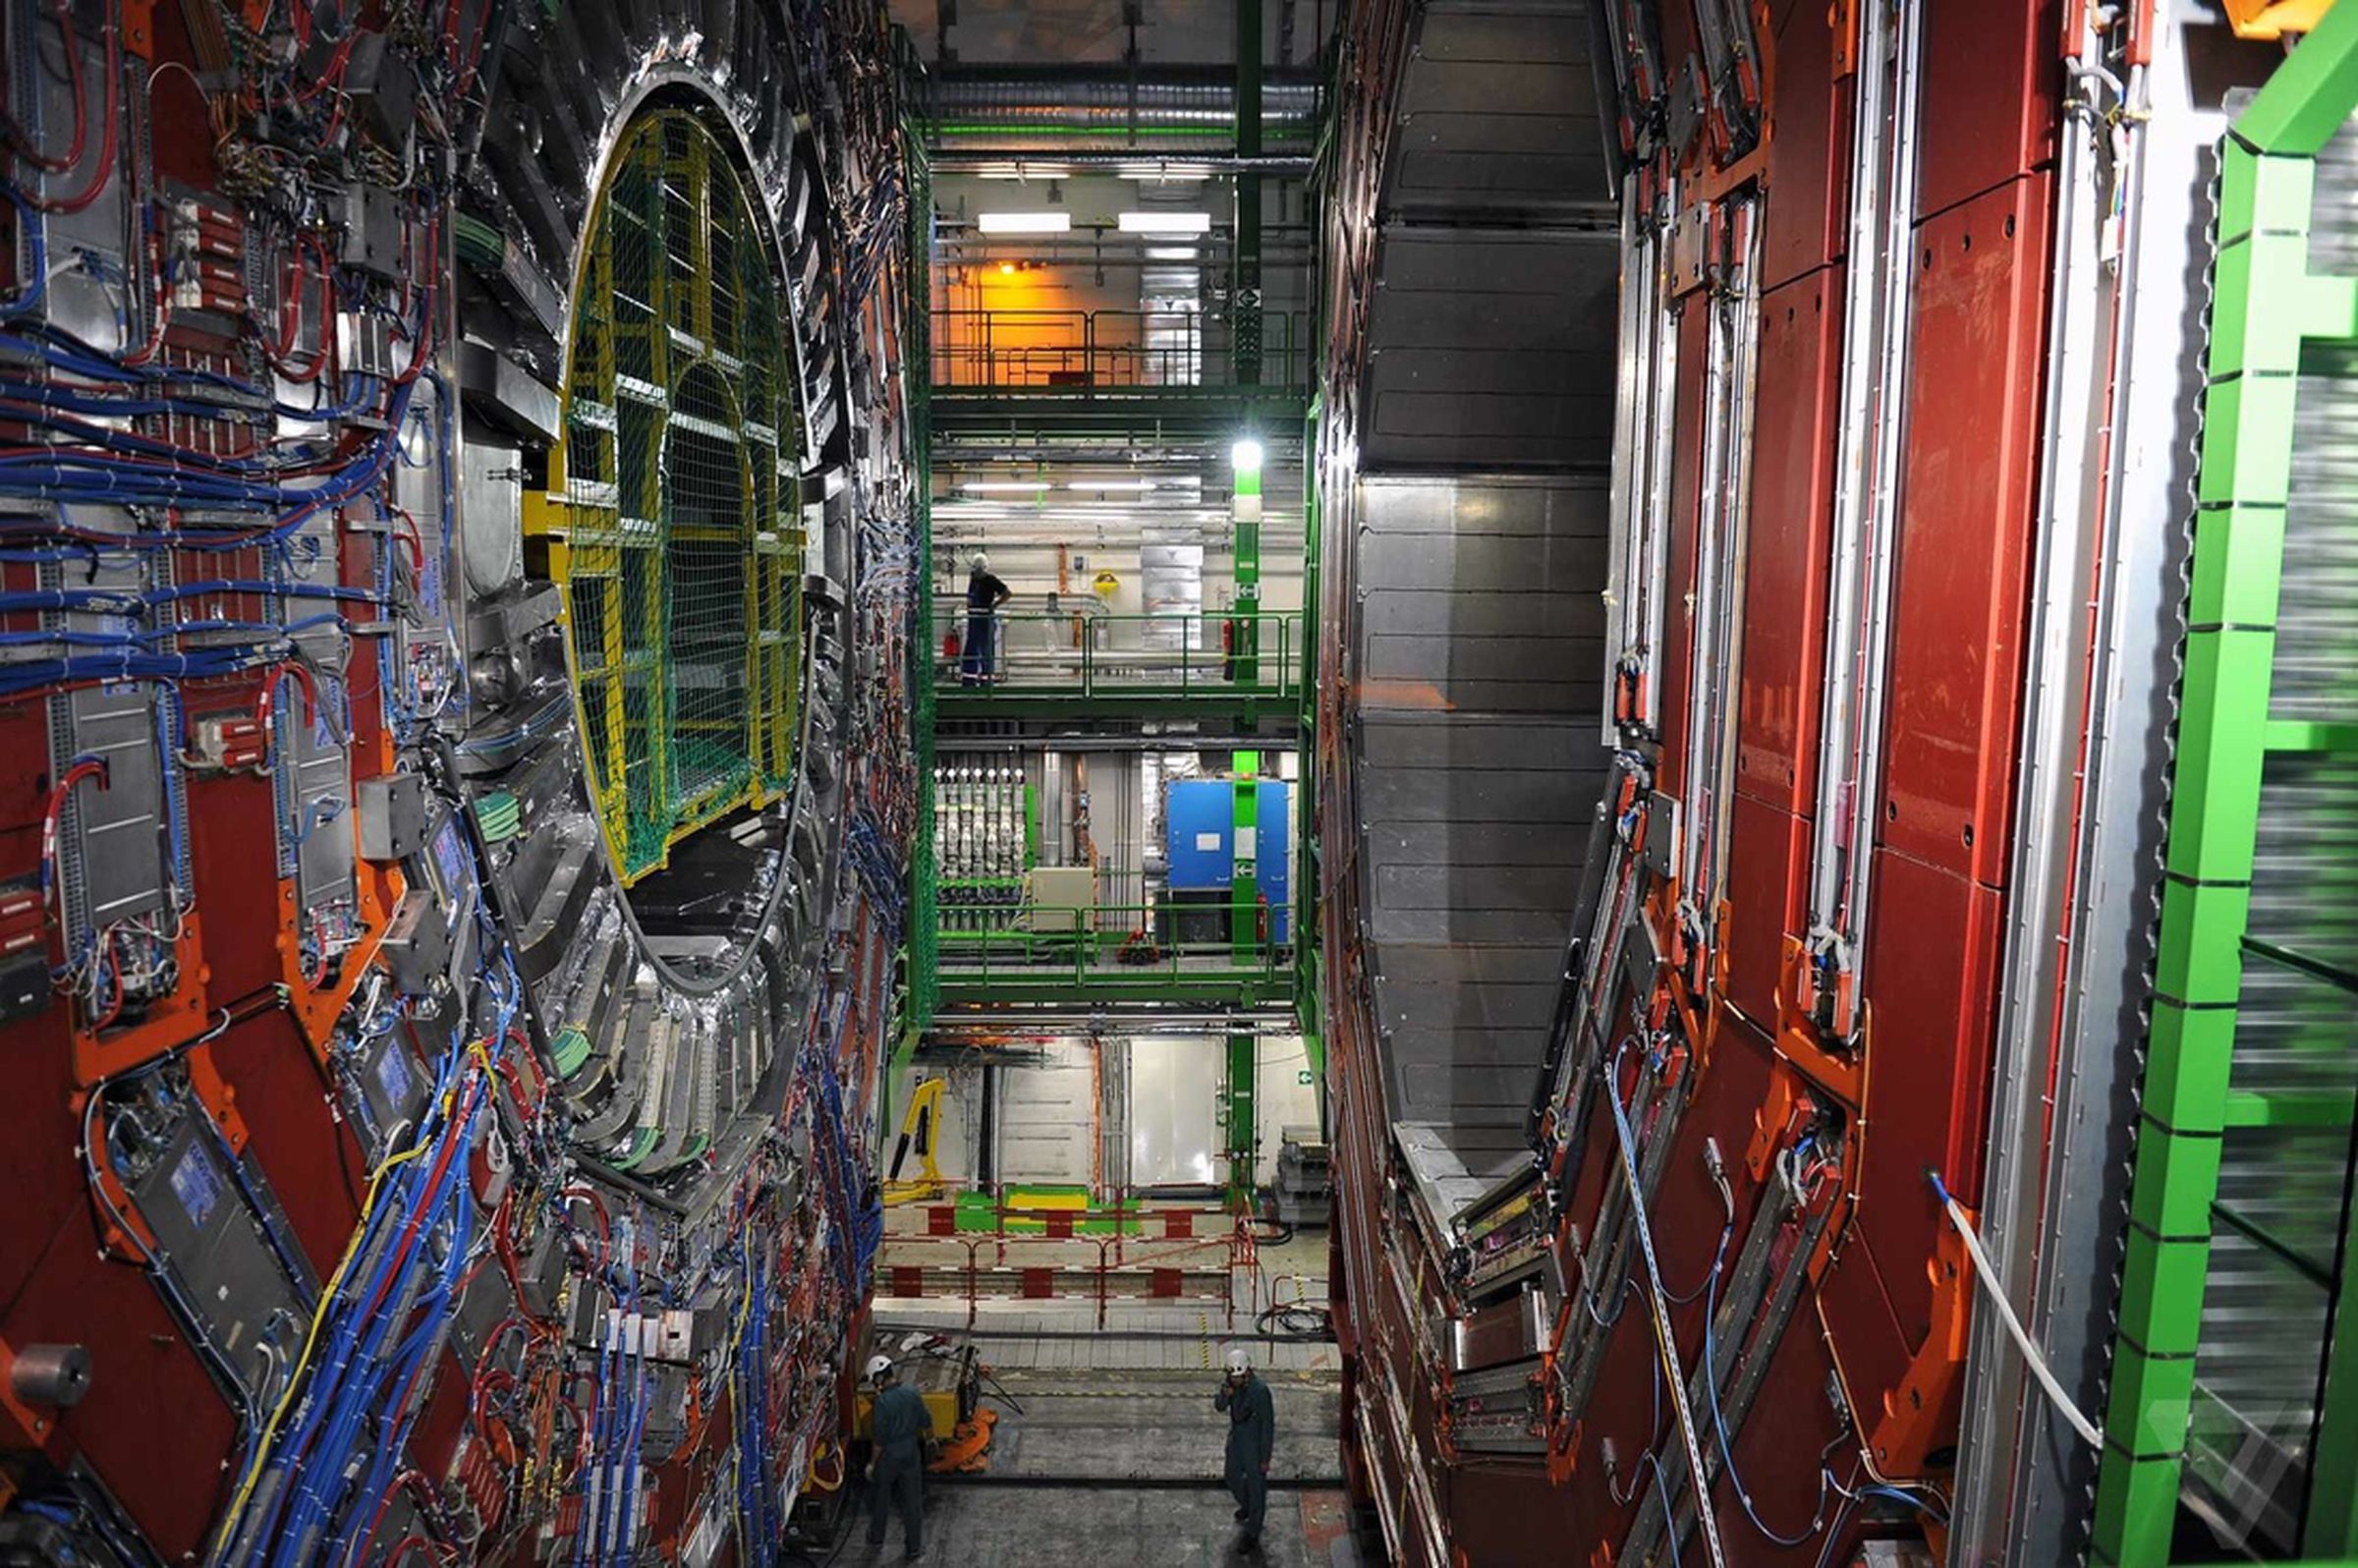 Large Hadron Collider photo tour